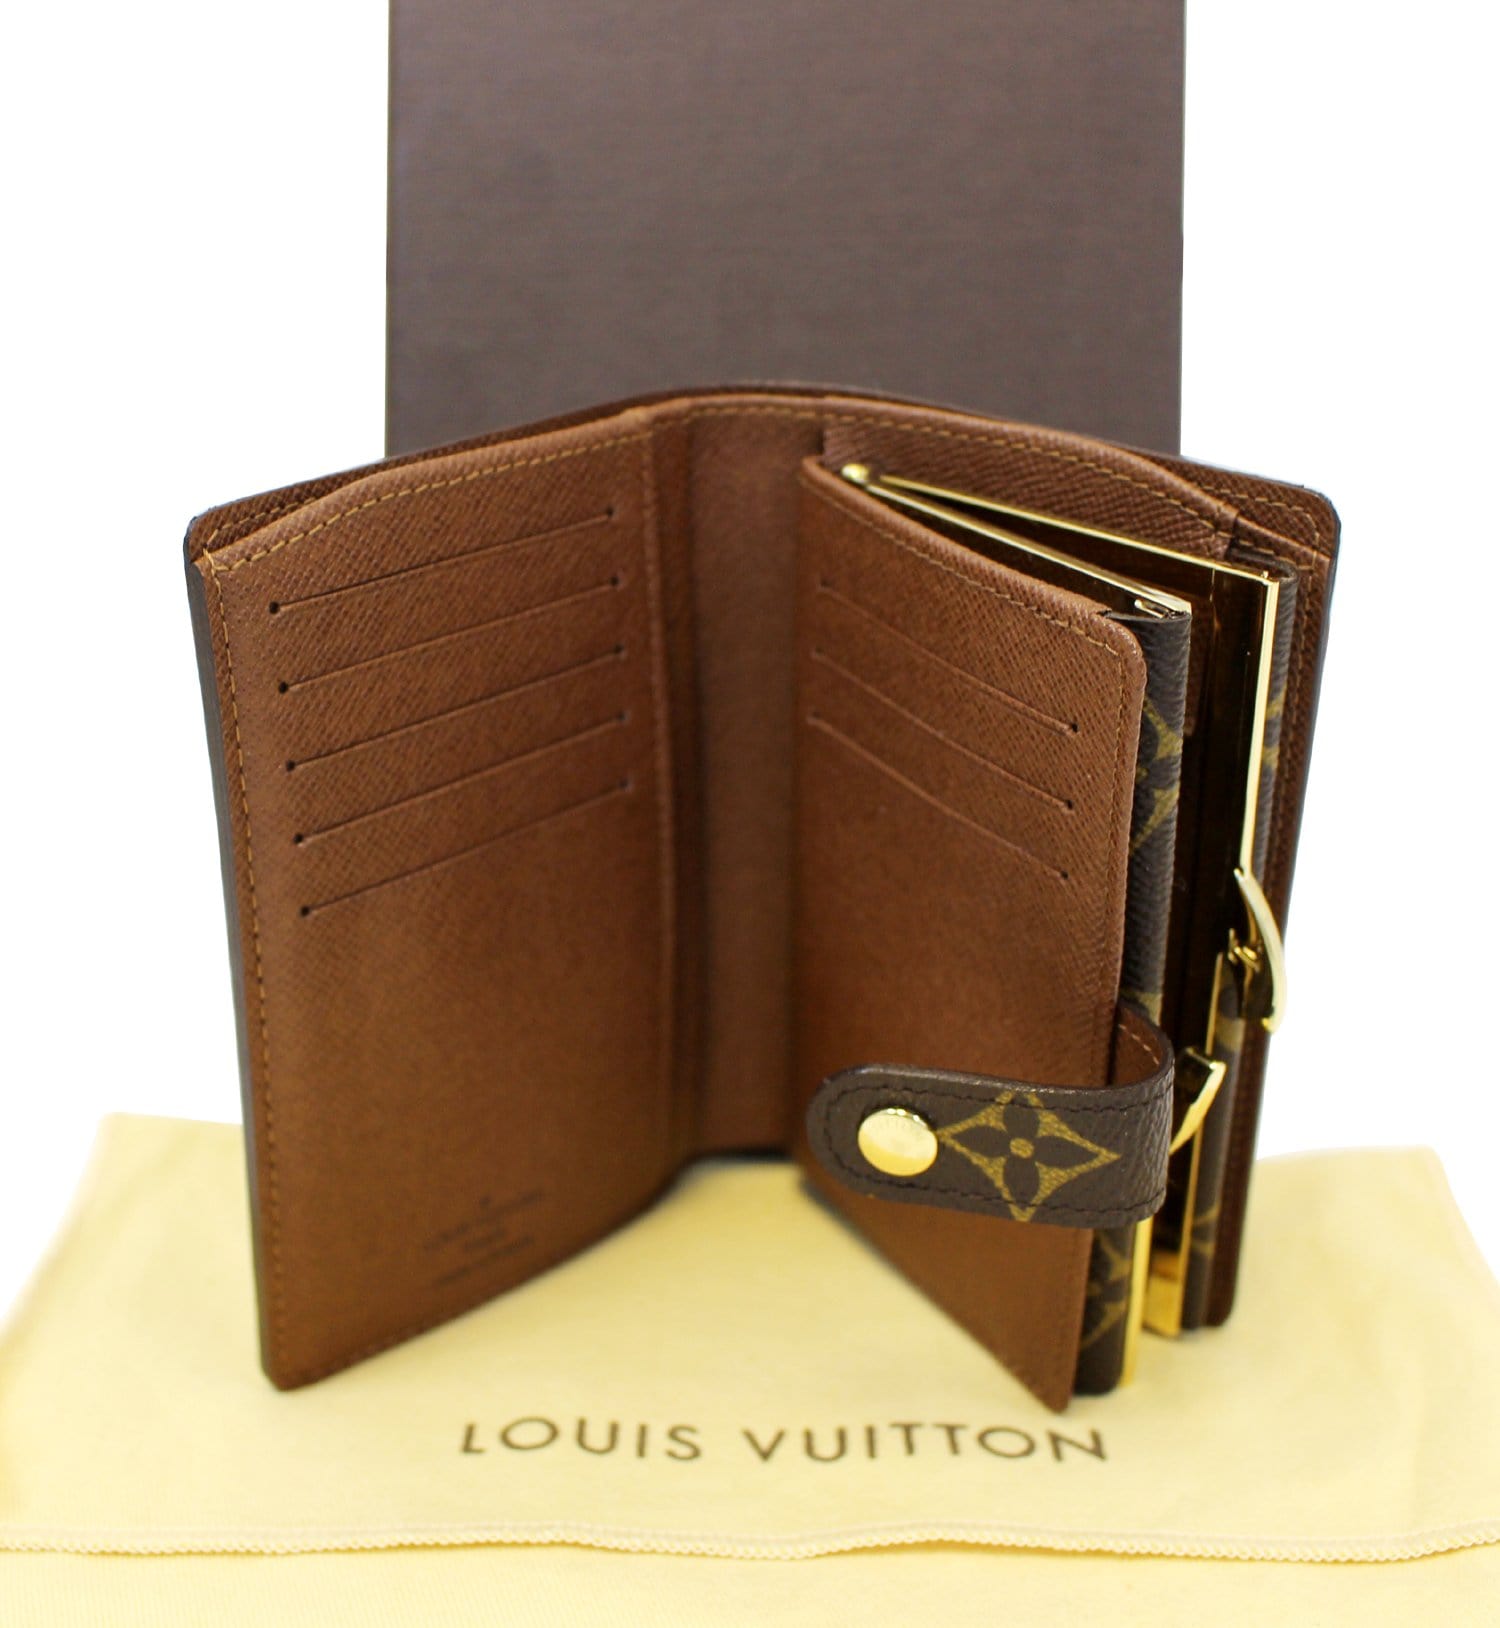 LOUIS VUITTON Vintage French Kisslock Wallet, Monogram